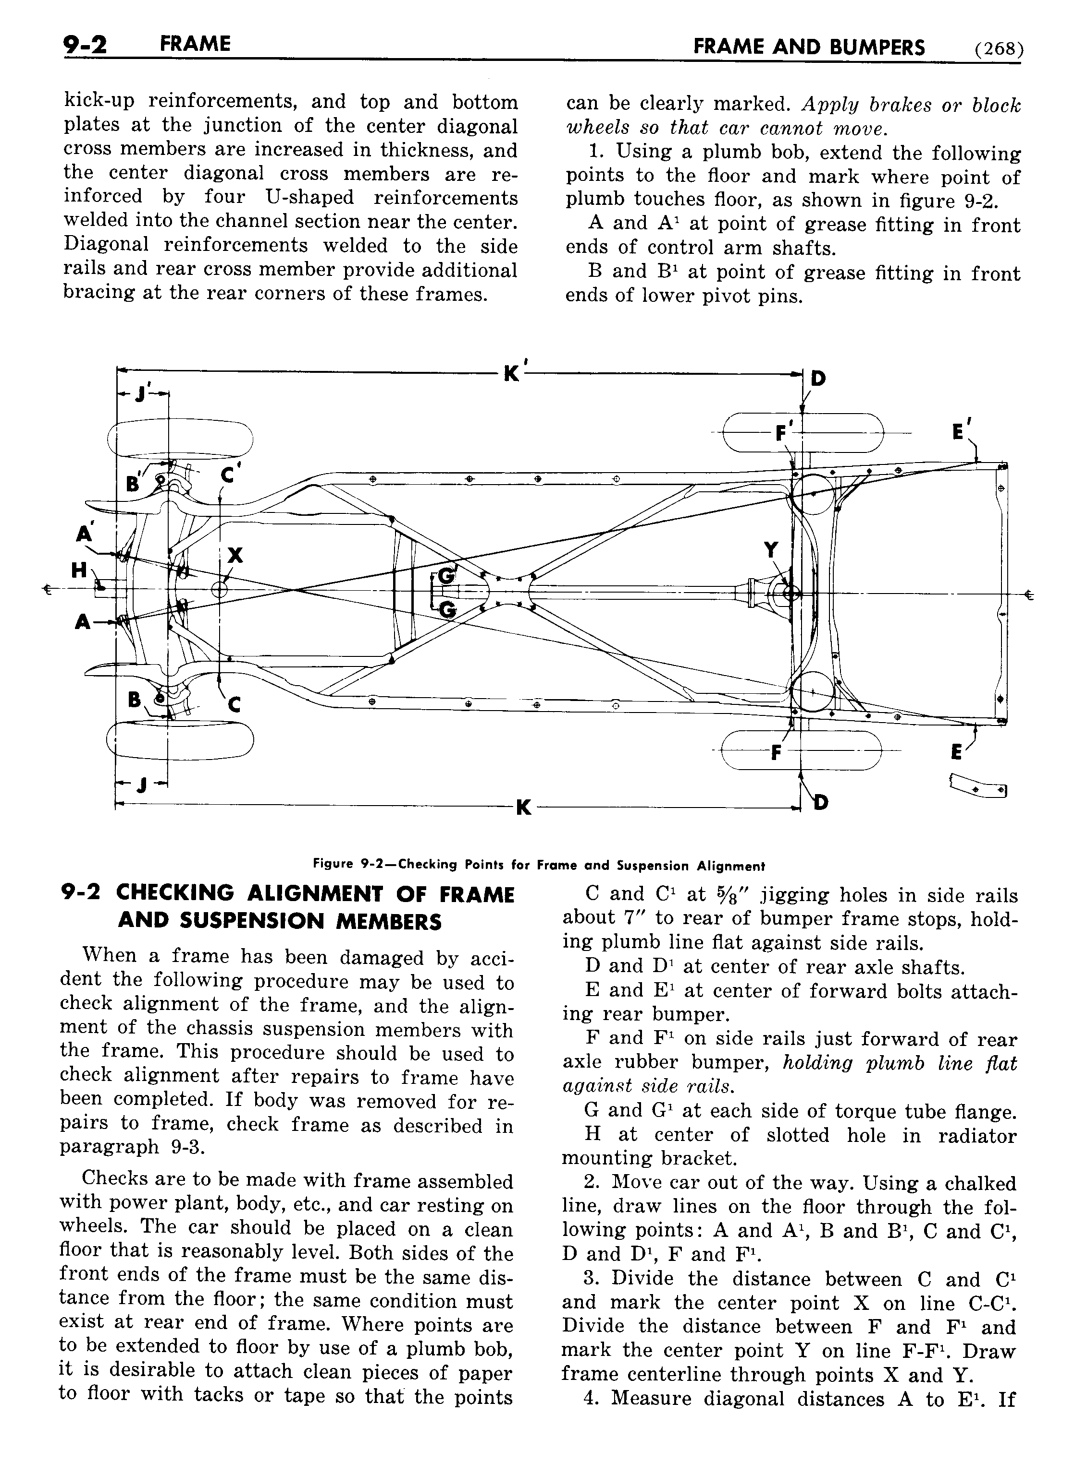 n_10 1948 Buick Shop Manual - Frame & Bumpers-002-002.jpg